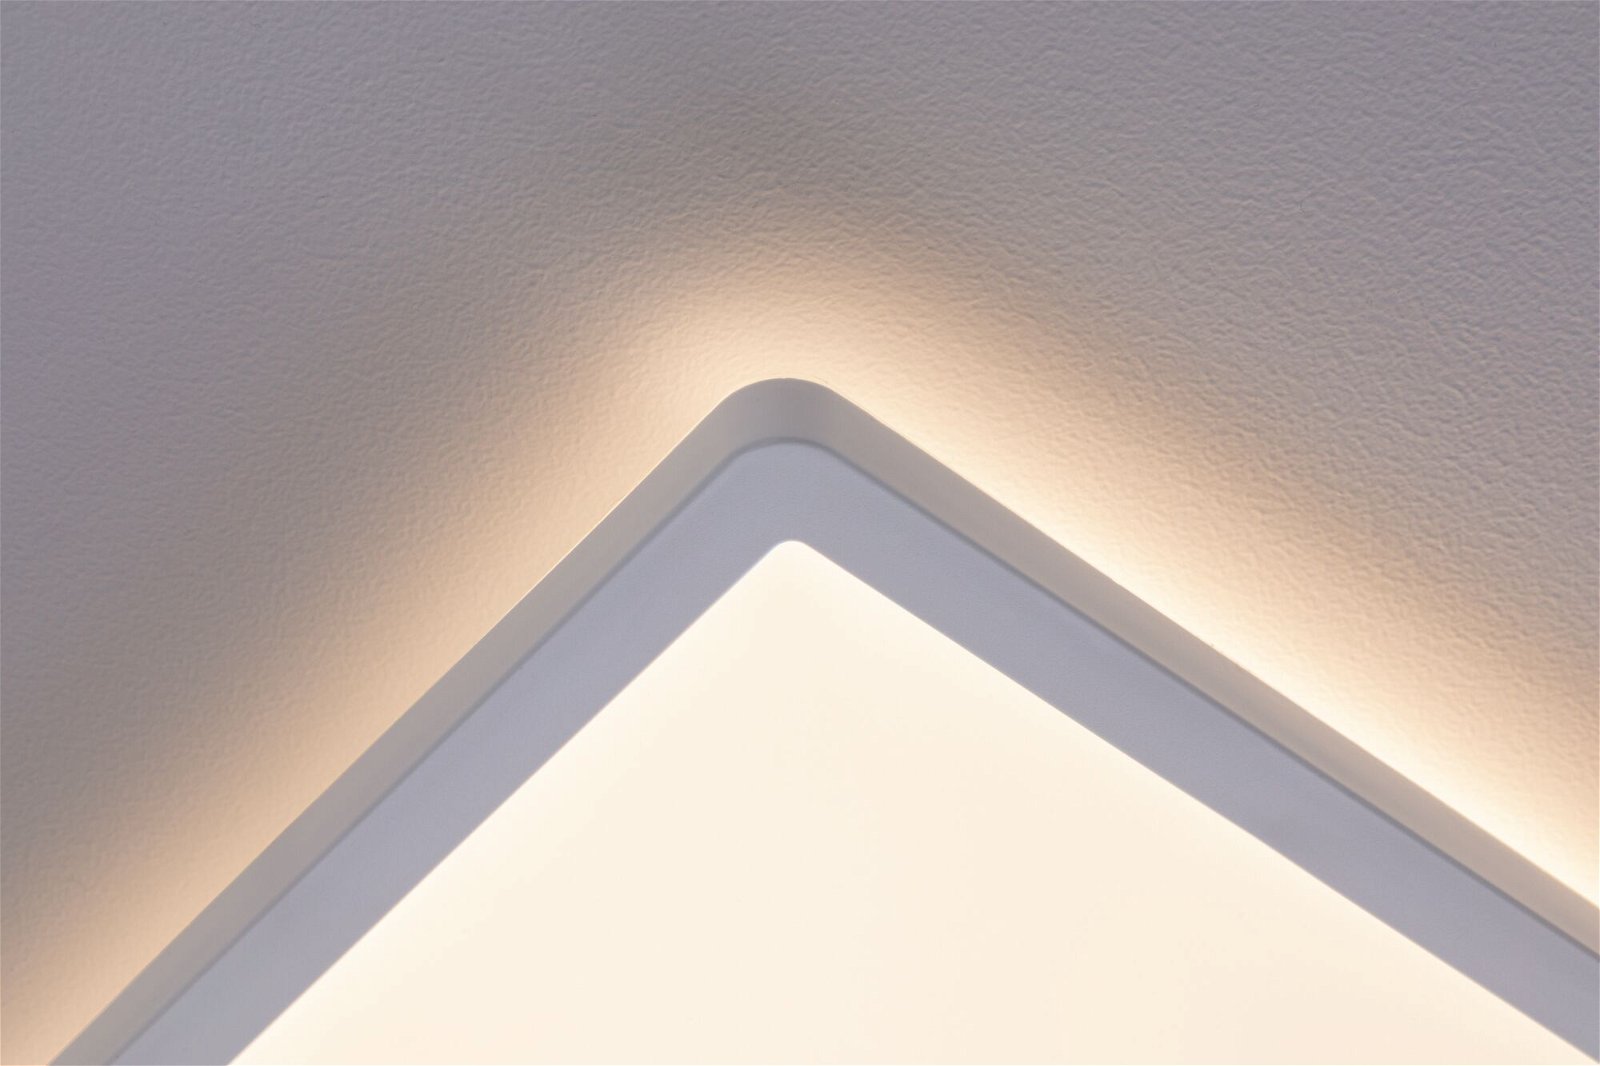 LED Panel Atria Shine Backlight square 580x200mm 22W 1800lm 3000K White